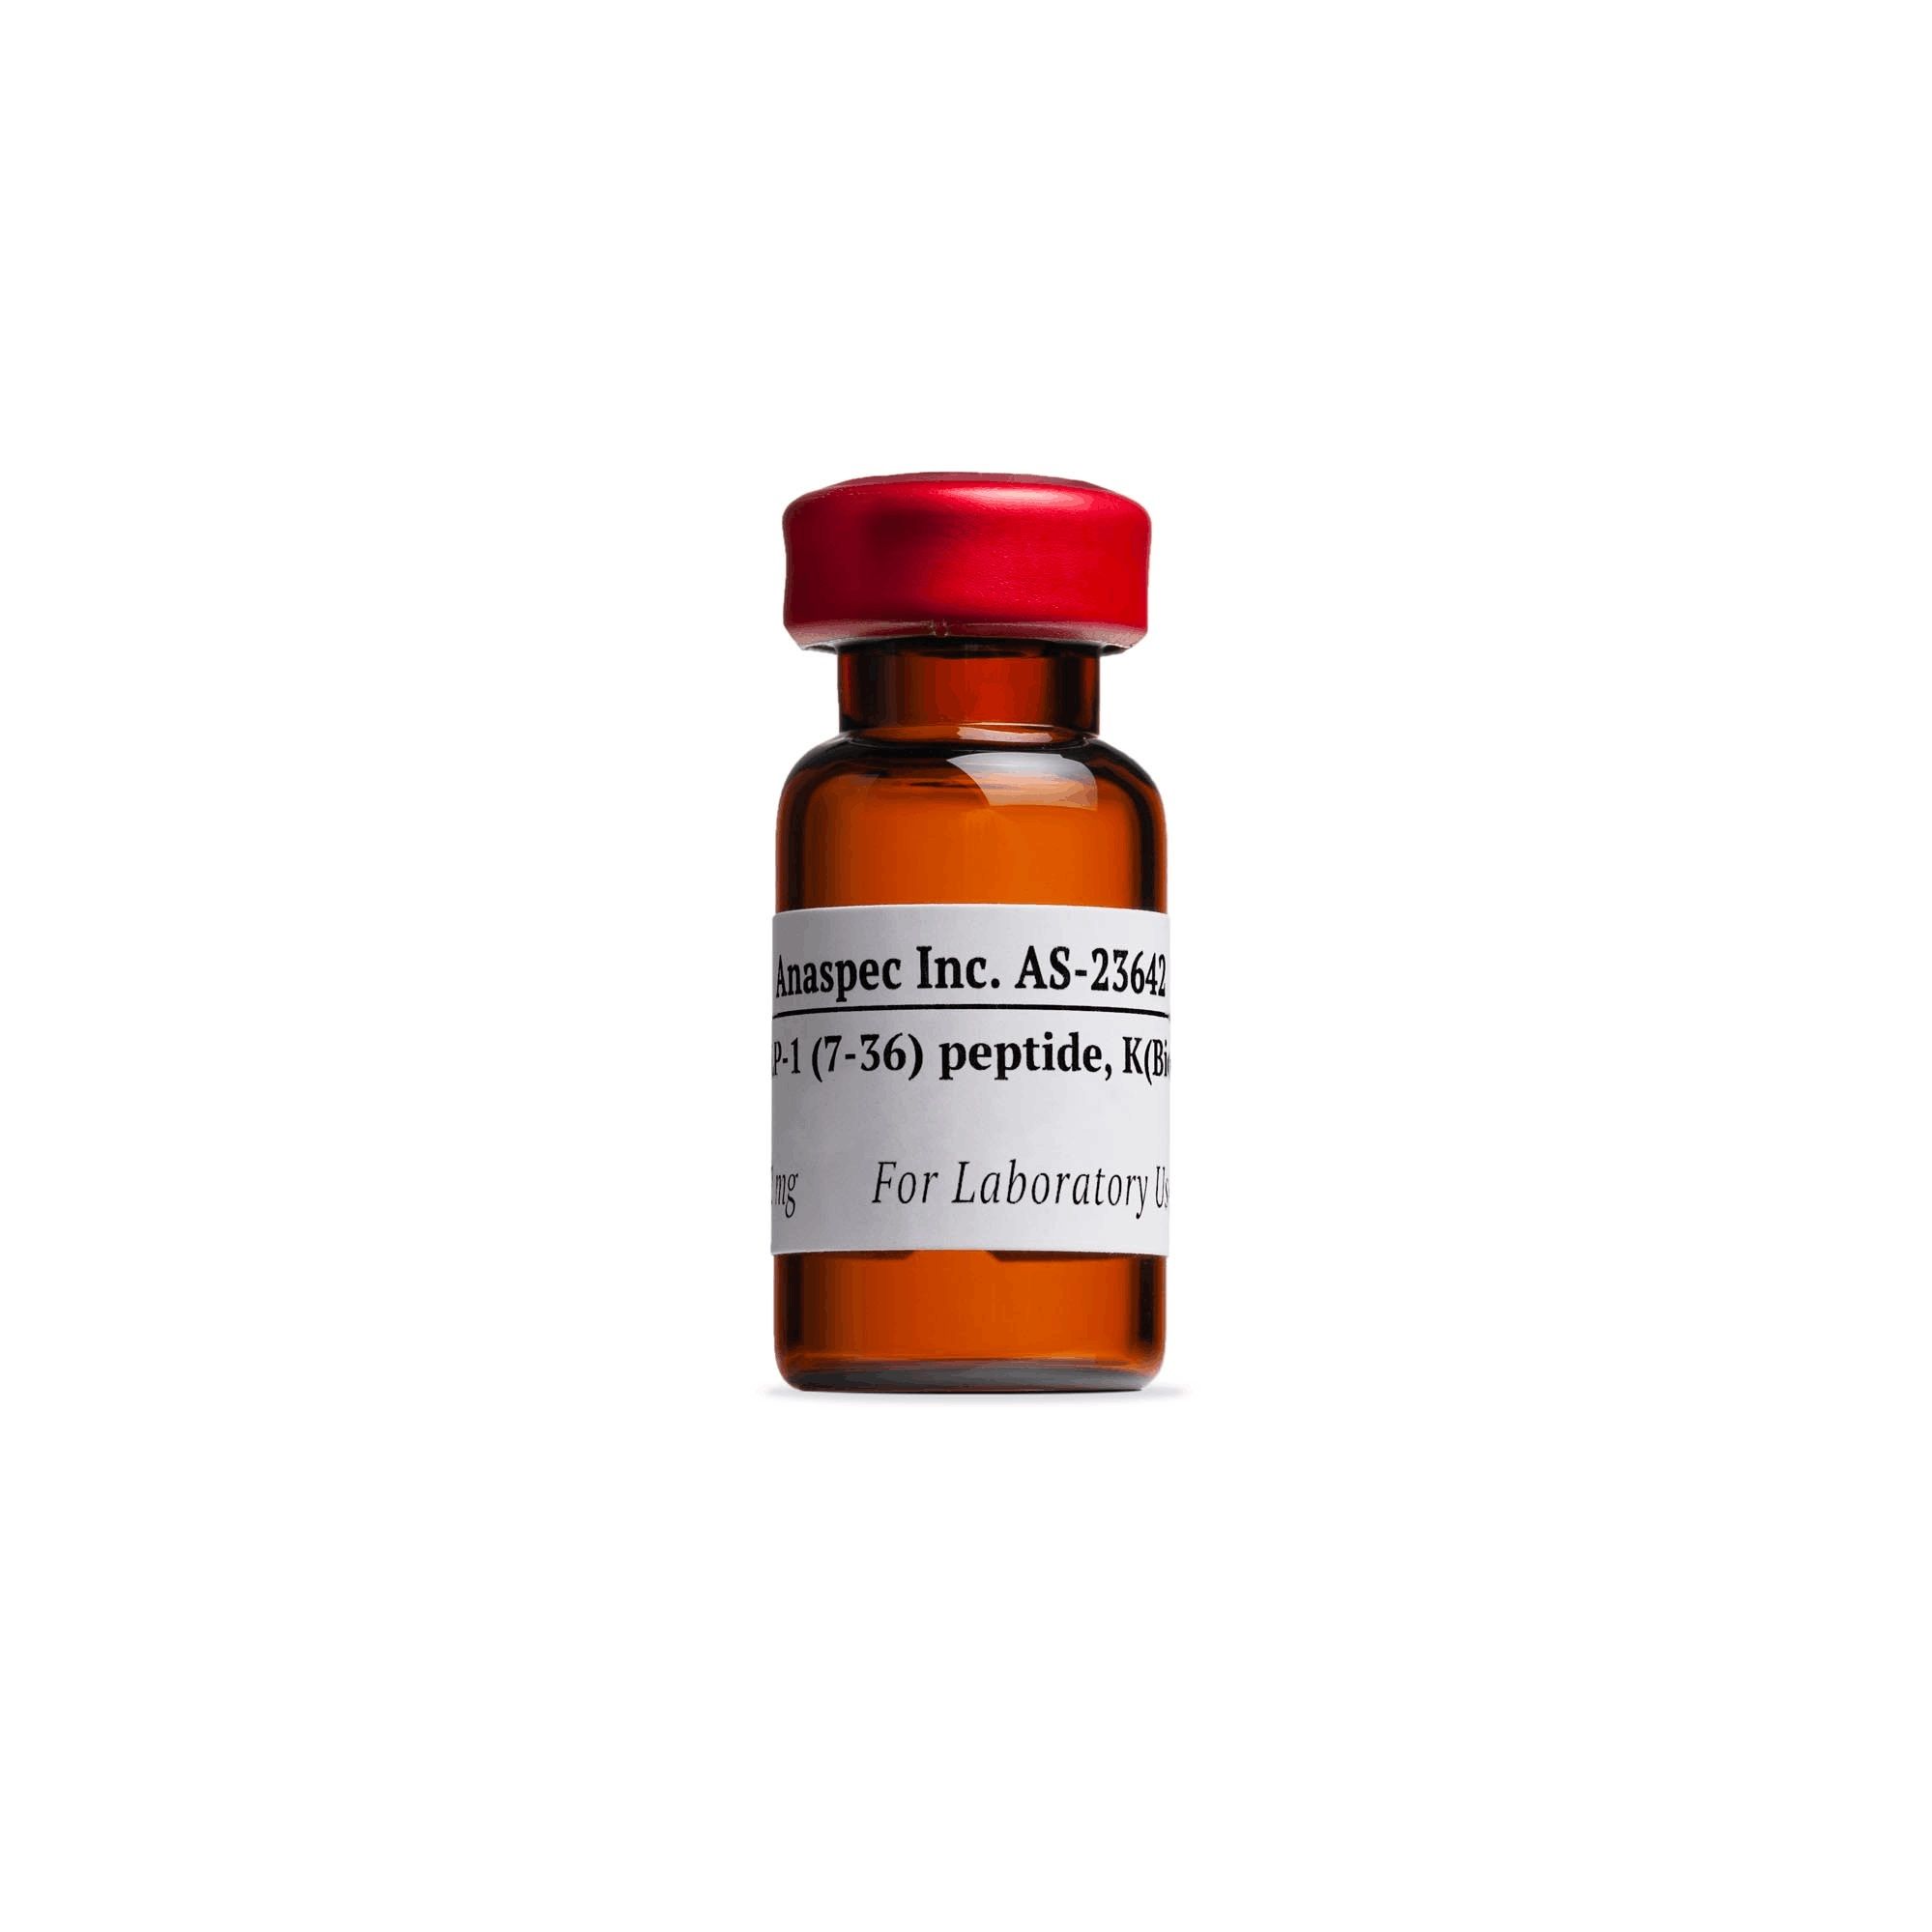 Glucagon-Like Peptide 1 GLP-1 (7-36) amide human mouse rat bovine guinea pig Biotin-labeled - 0.5 mg